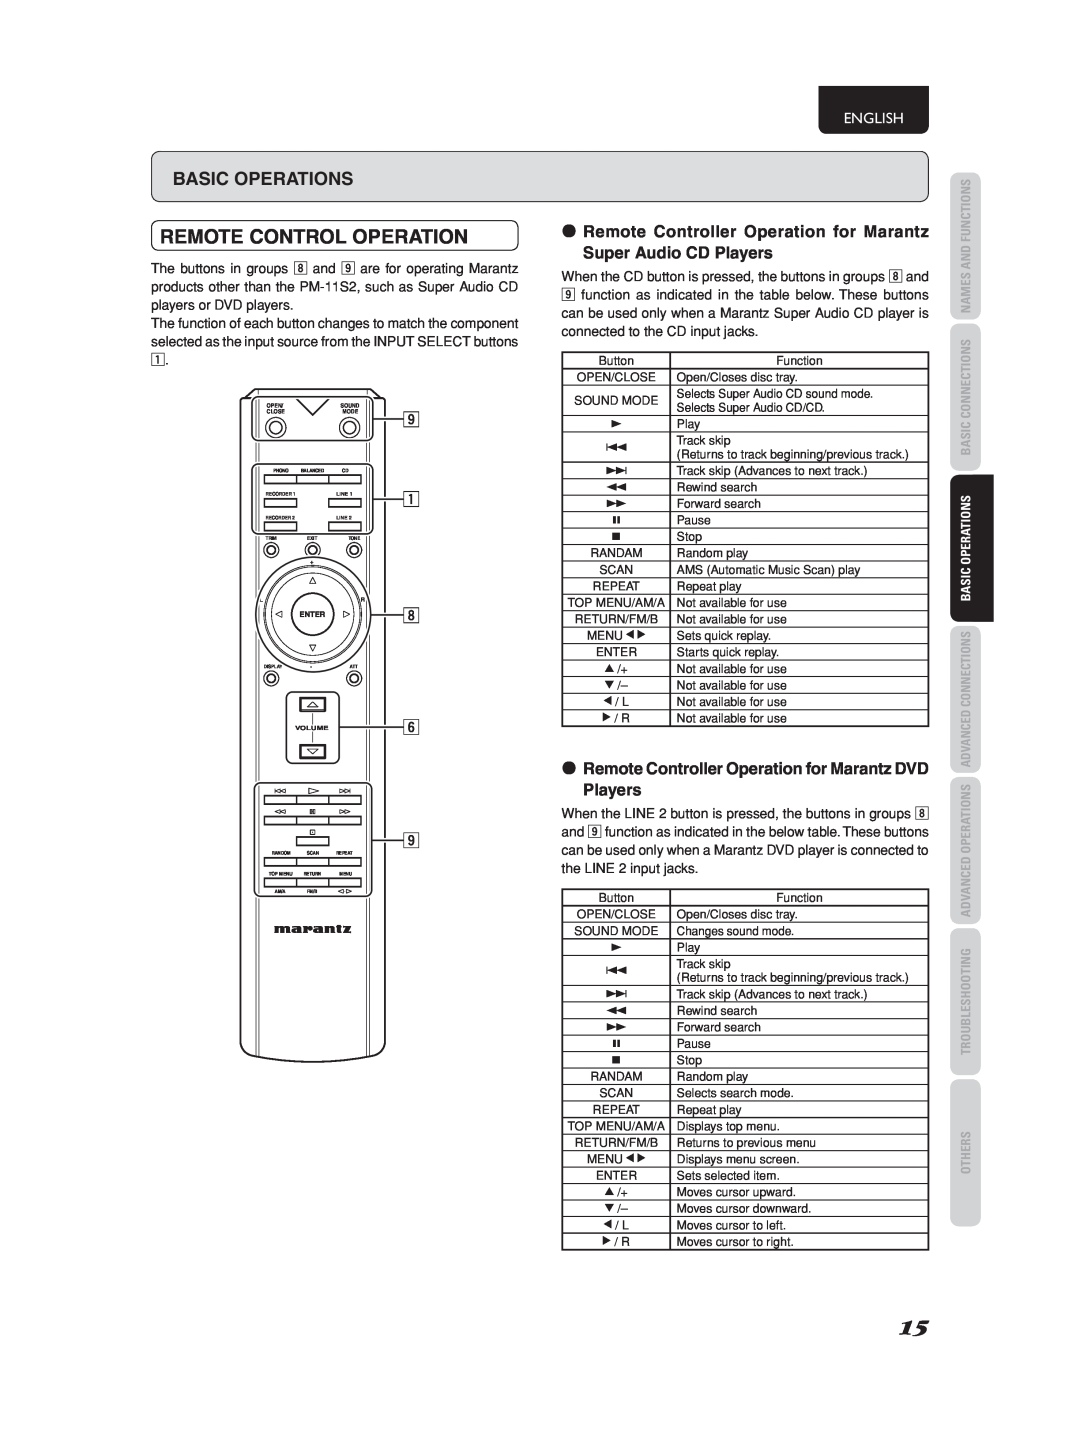 Marantz PM-11S2 manual Remote Control Operation, 3 /+ 